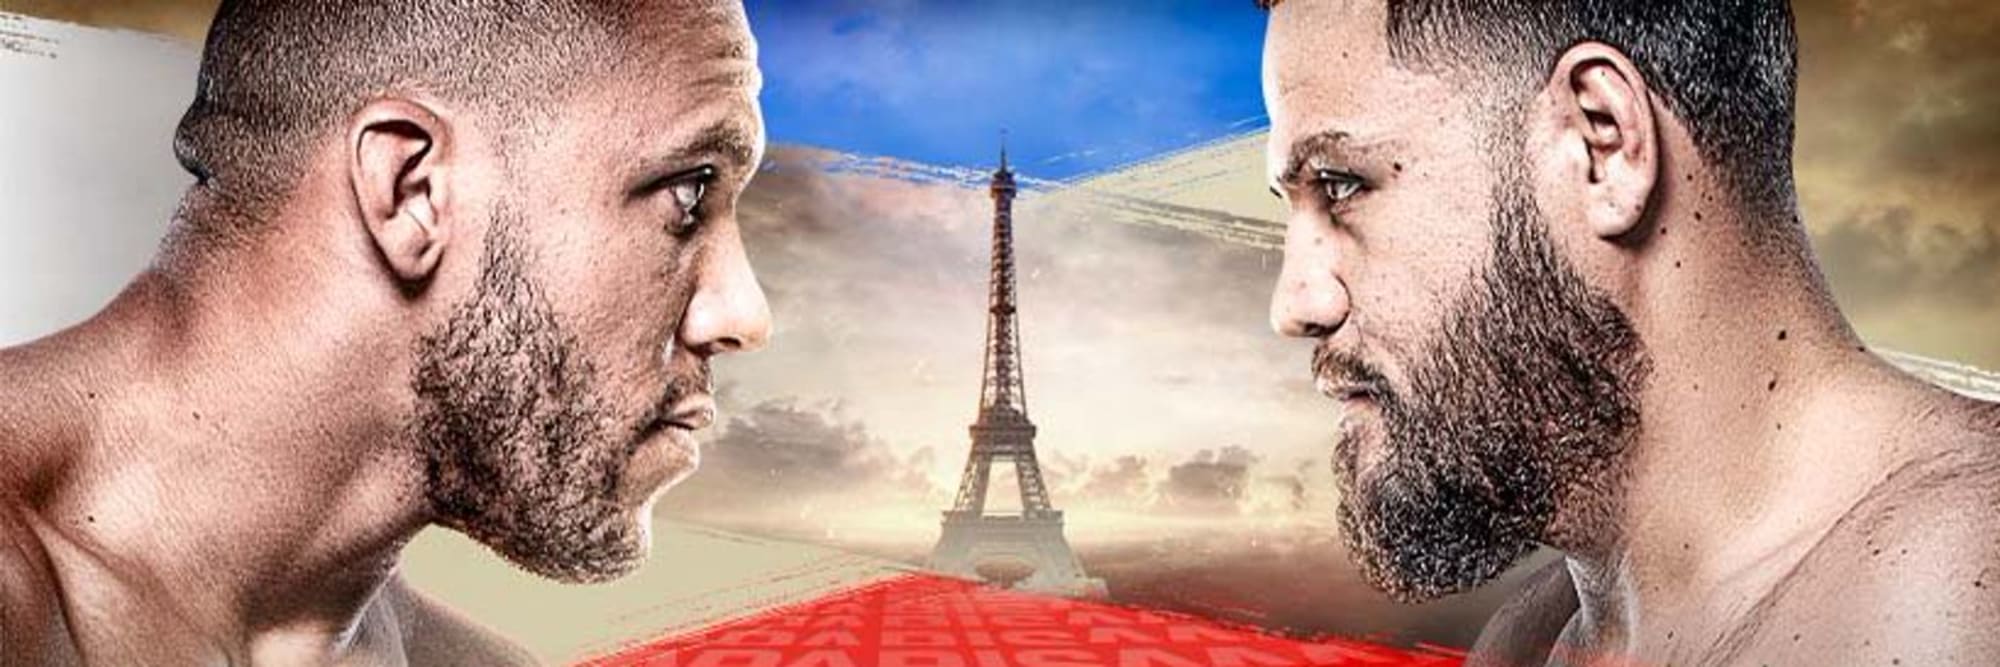 Photo of UFC Paris: Ciryl Gane vs. Tai Tuivasa live results [UPDATED]